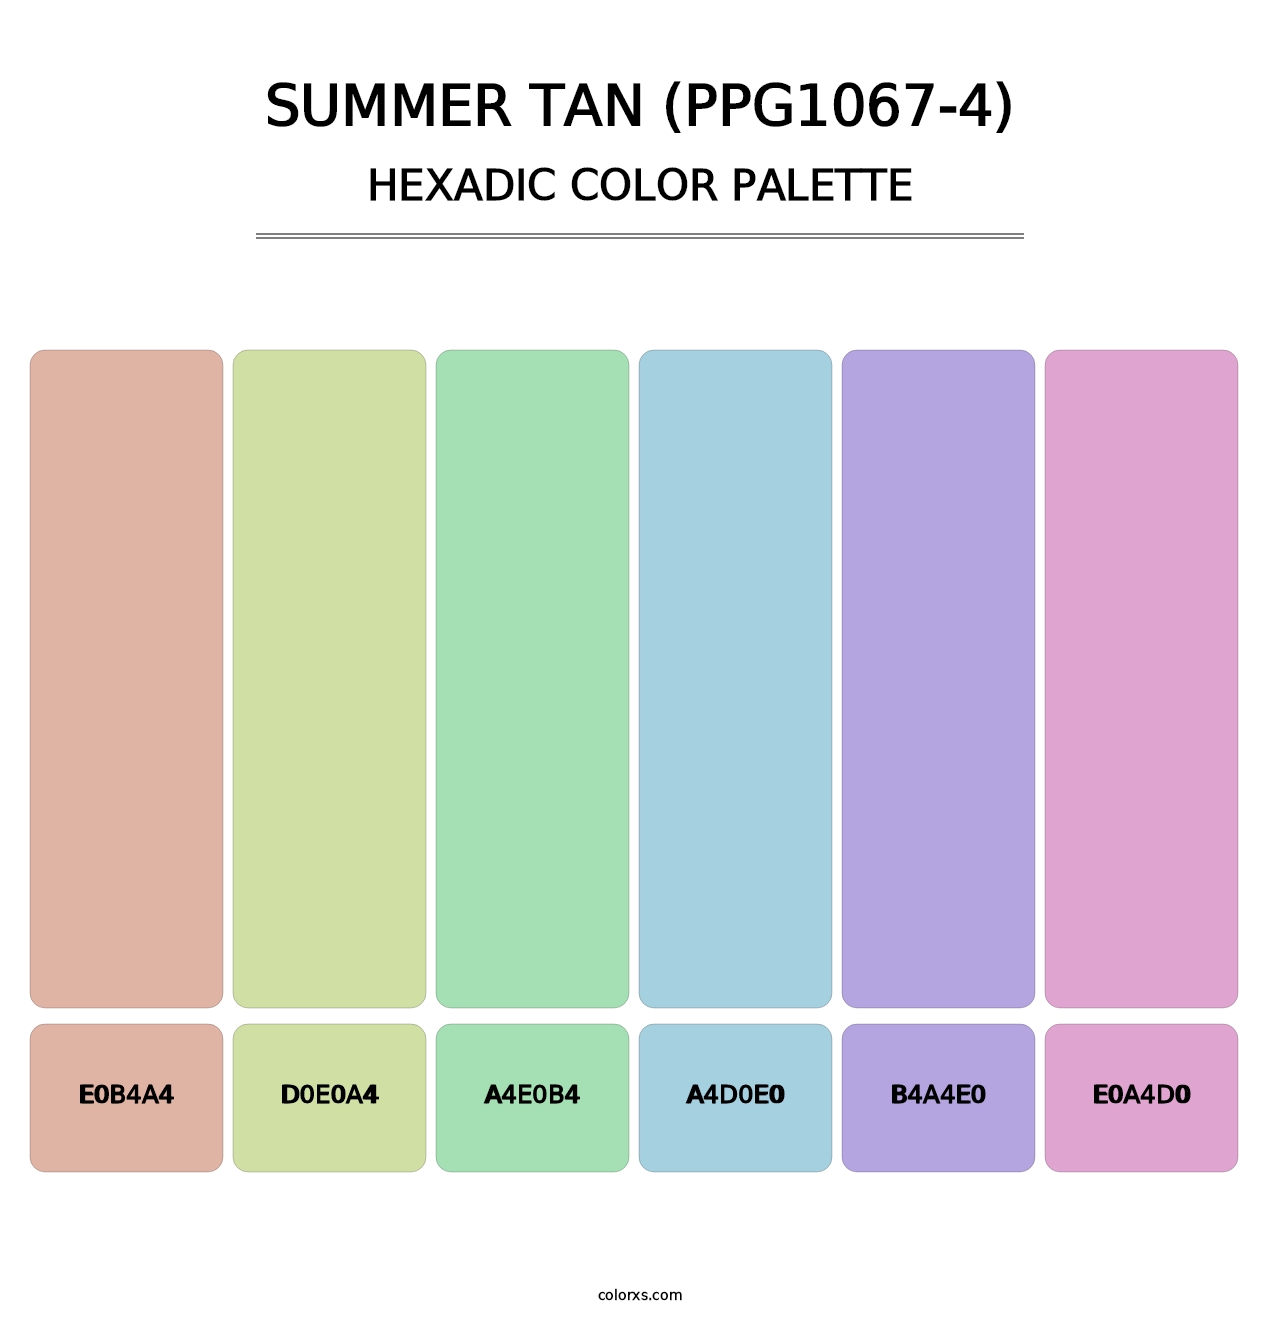 Summer Tan (PPG1067-4) - Hexadic Color Palette